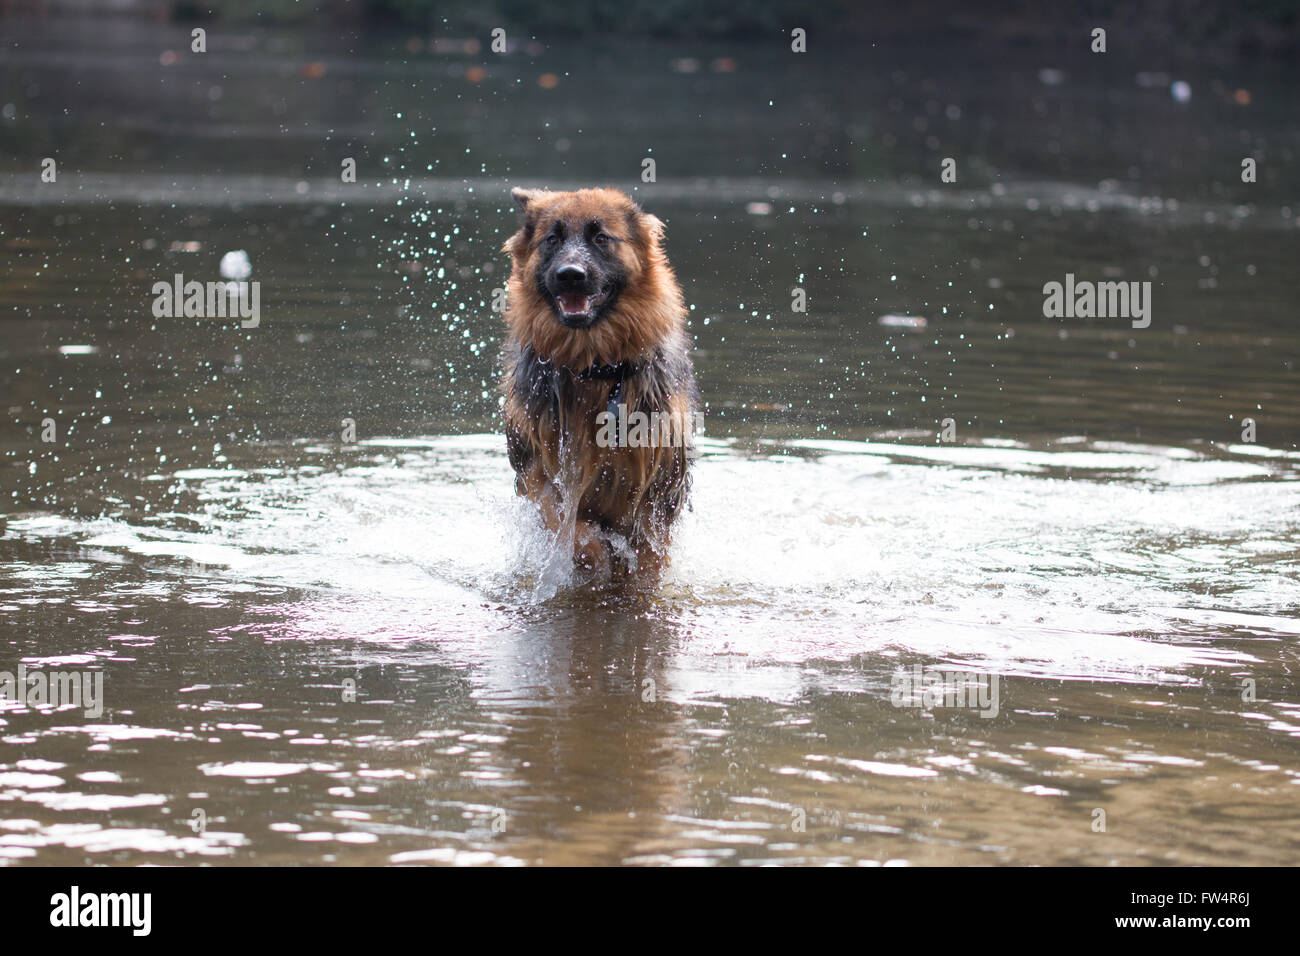 Dog, German Shepherd, running in water Stock Photo